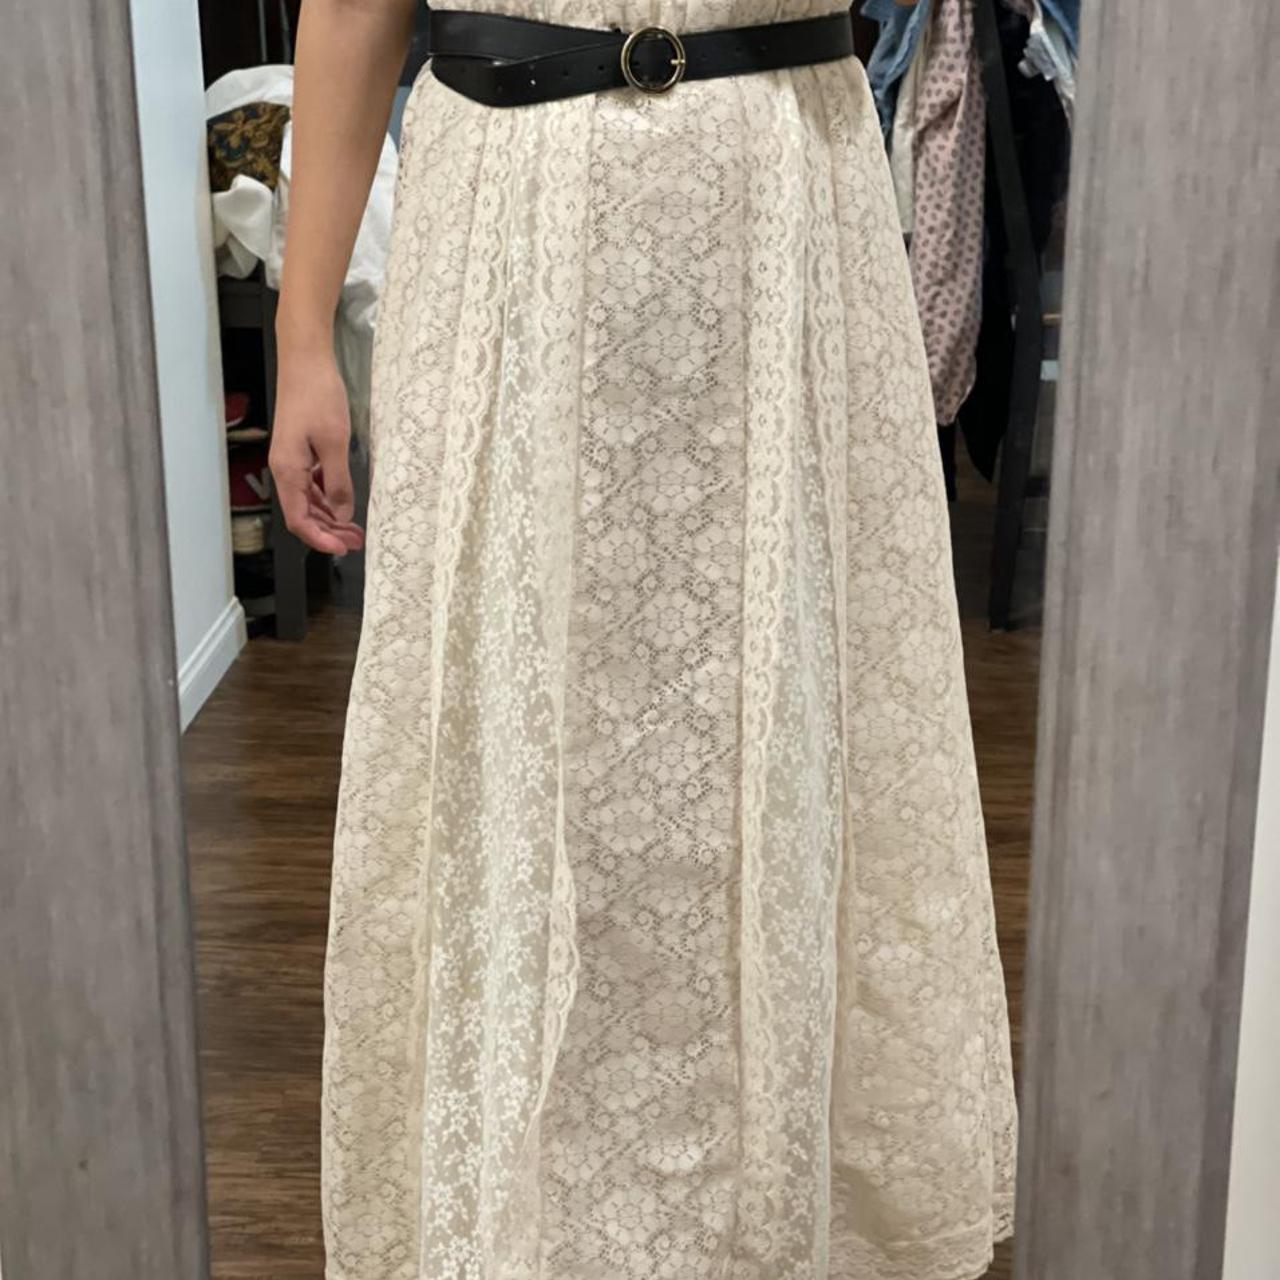 Product Image 1 - Lace maxi skirt ☁️🦋✨
Beautiful lace